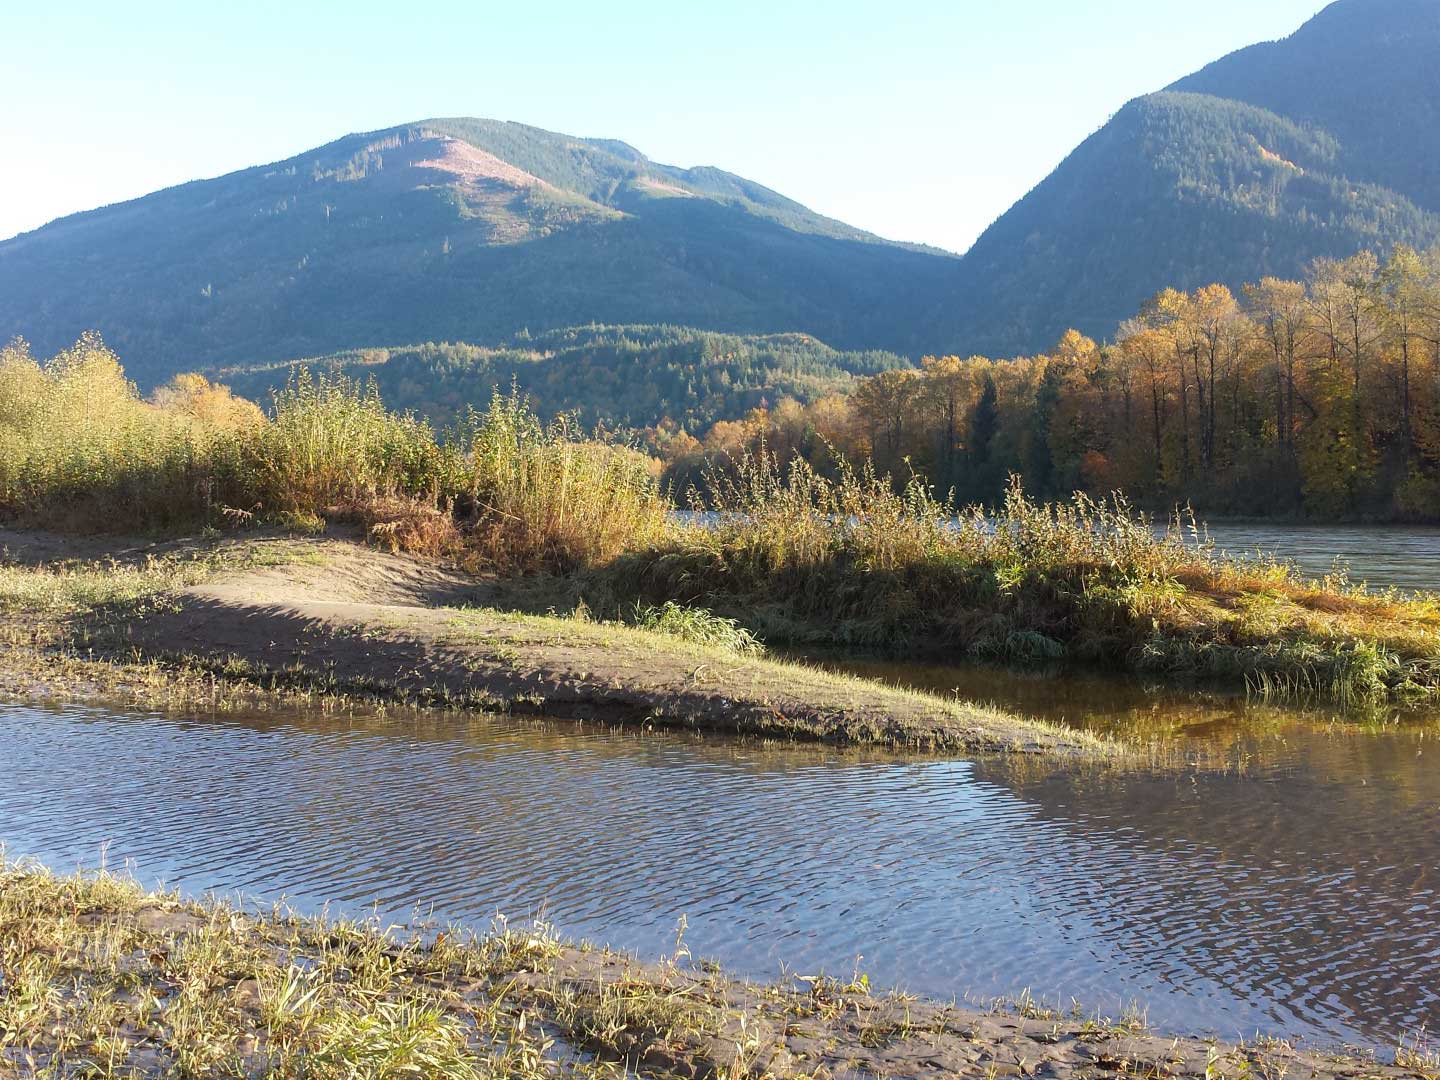 Muddy Creek Conservation Area protects shoreline habitat along the Skagit River. Photograph credit: Skagit Land Trust staff.